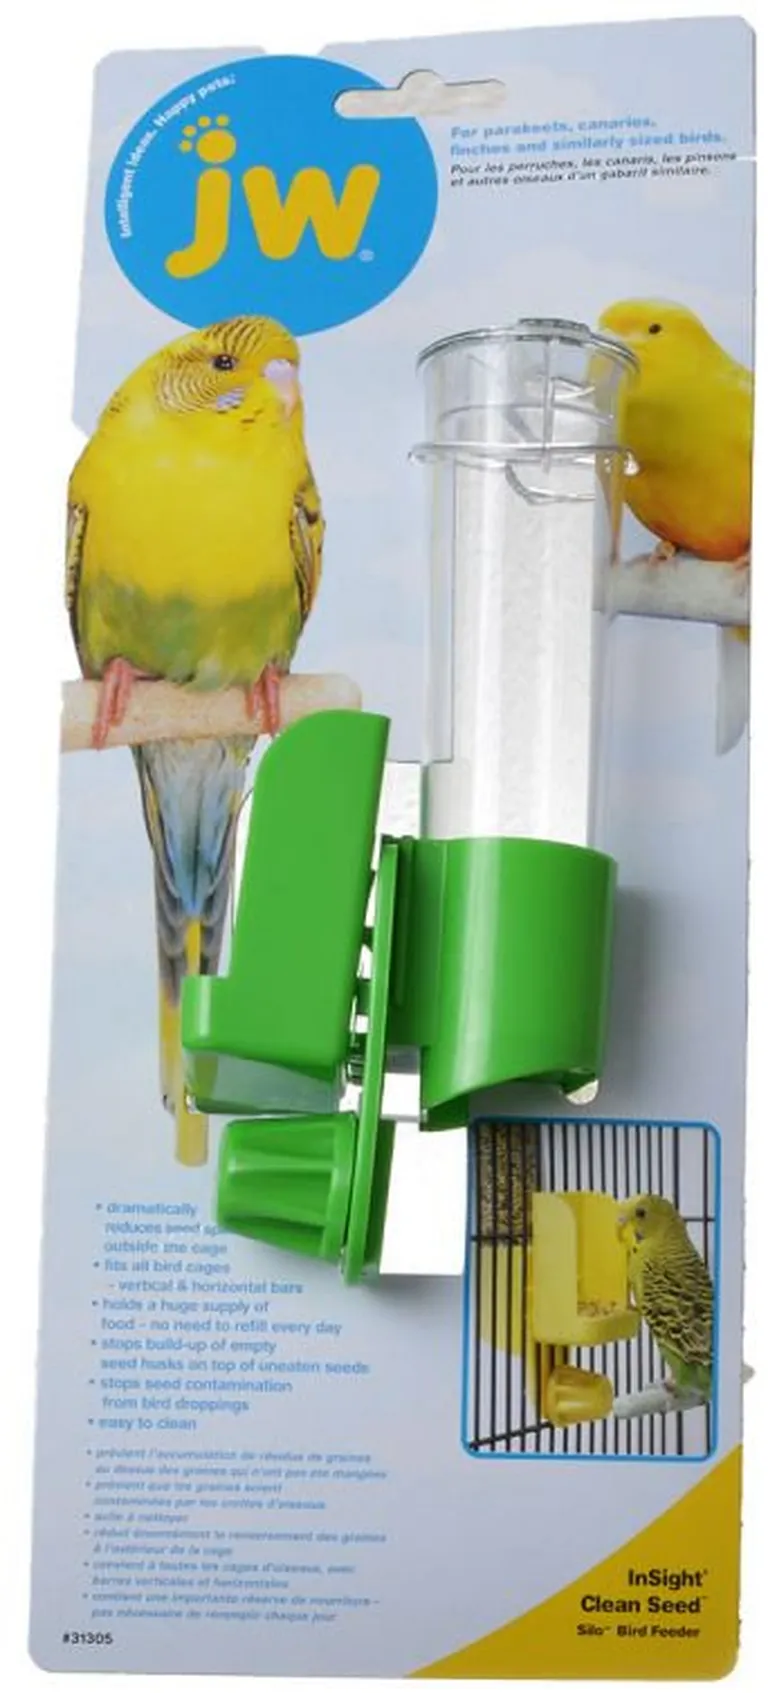 JW Pet Insight Clean Seed Silo Bird Feeder Photo 2